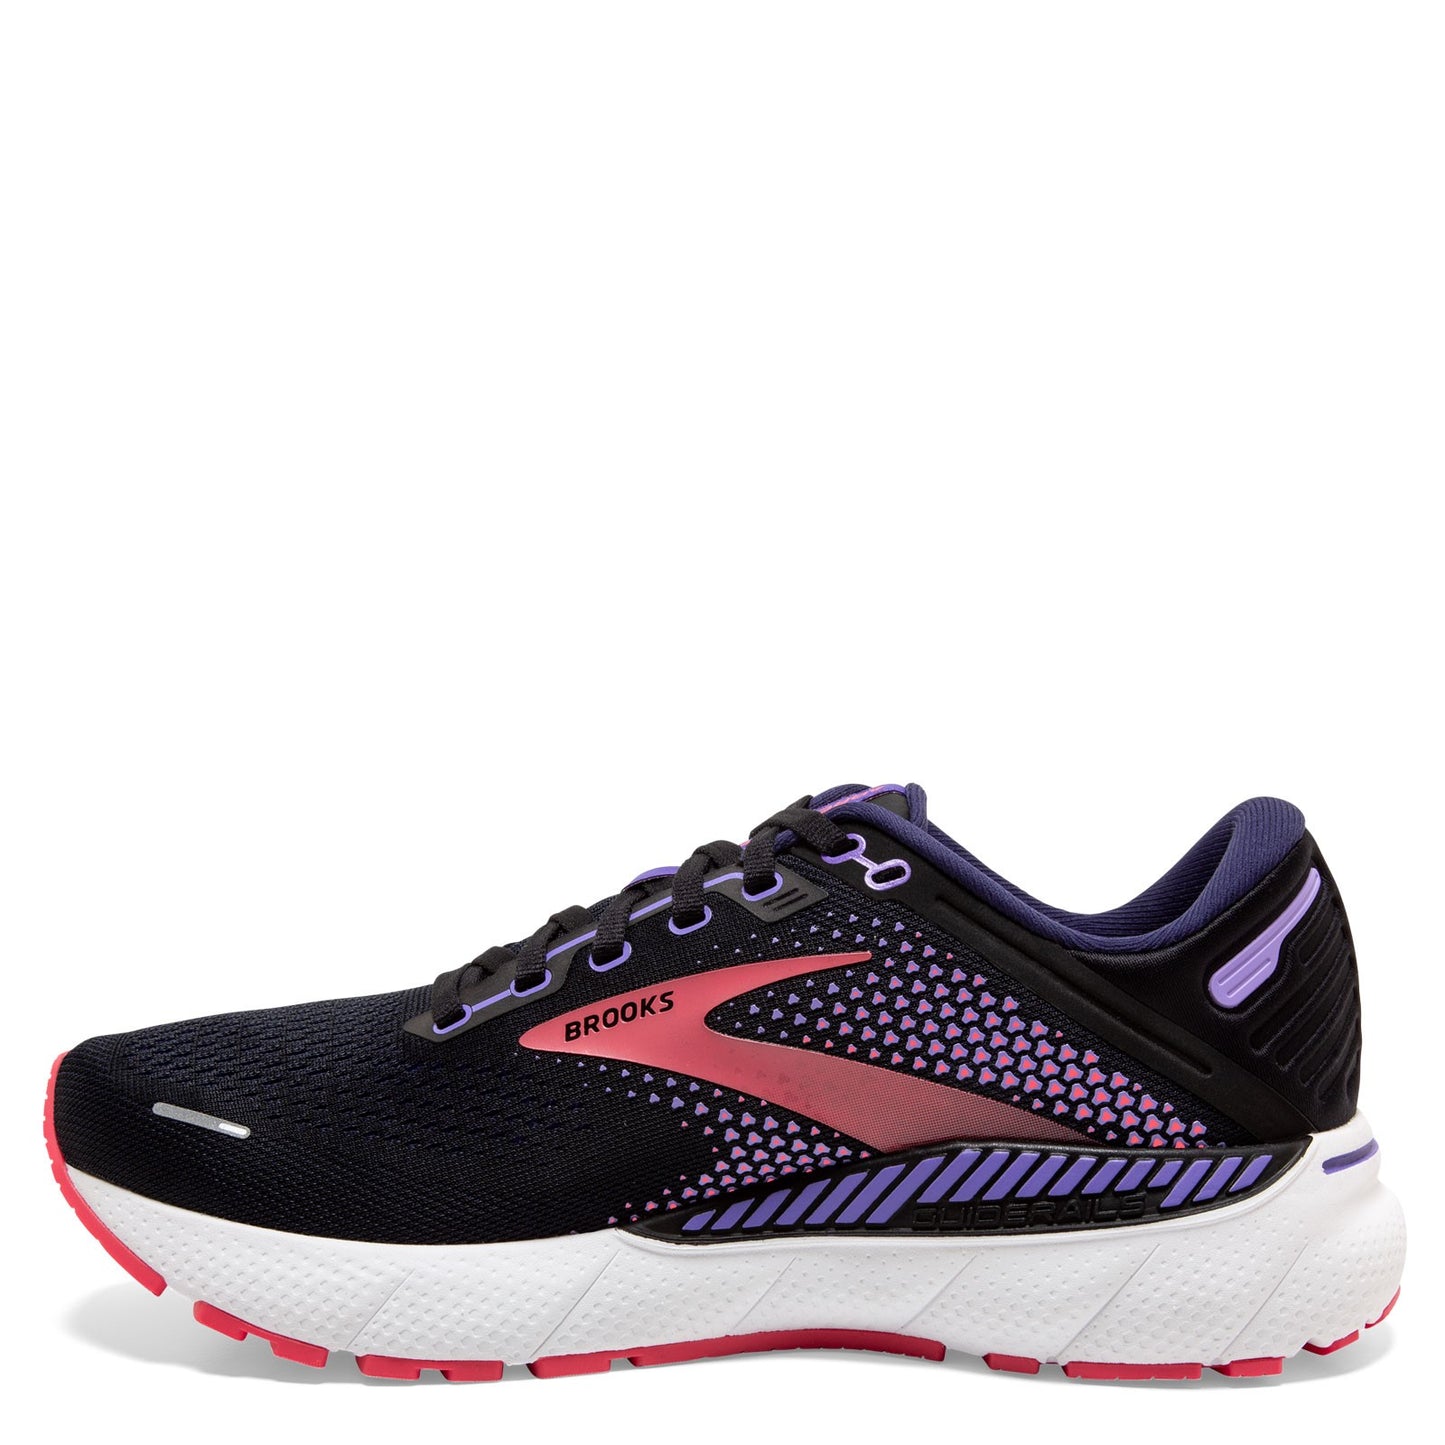 Peltz Shoes  Women's Brooks Adrenaline GTS 22 Running Shoe - Narrow Width Black/Purple/Coral 120353 2A 080